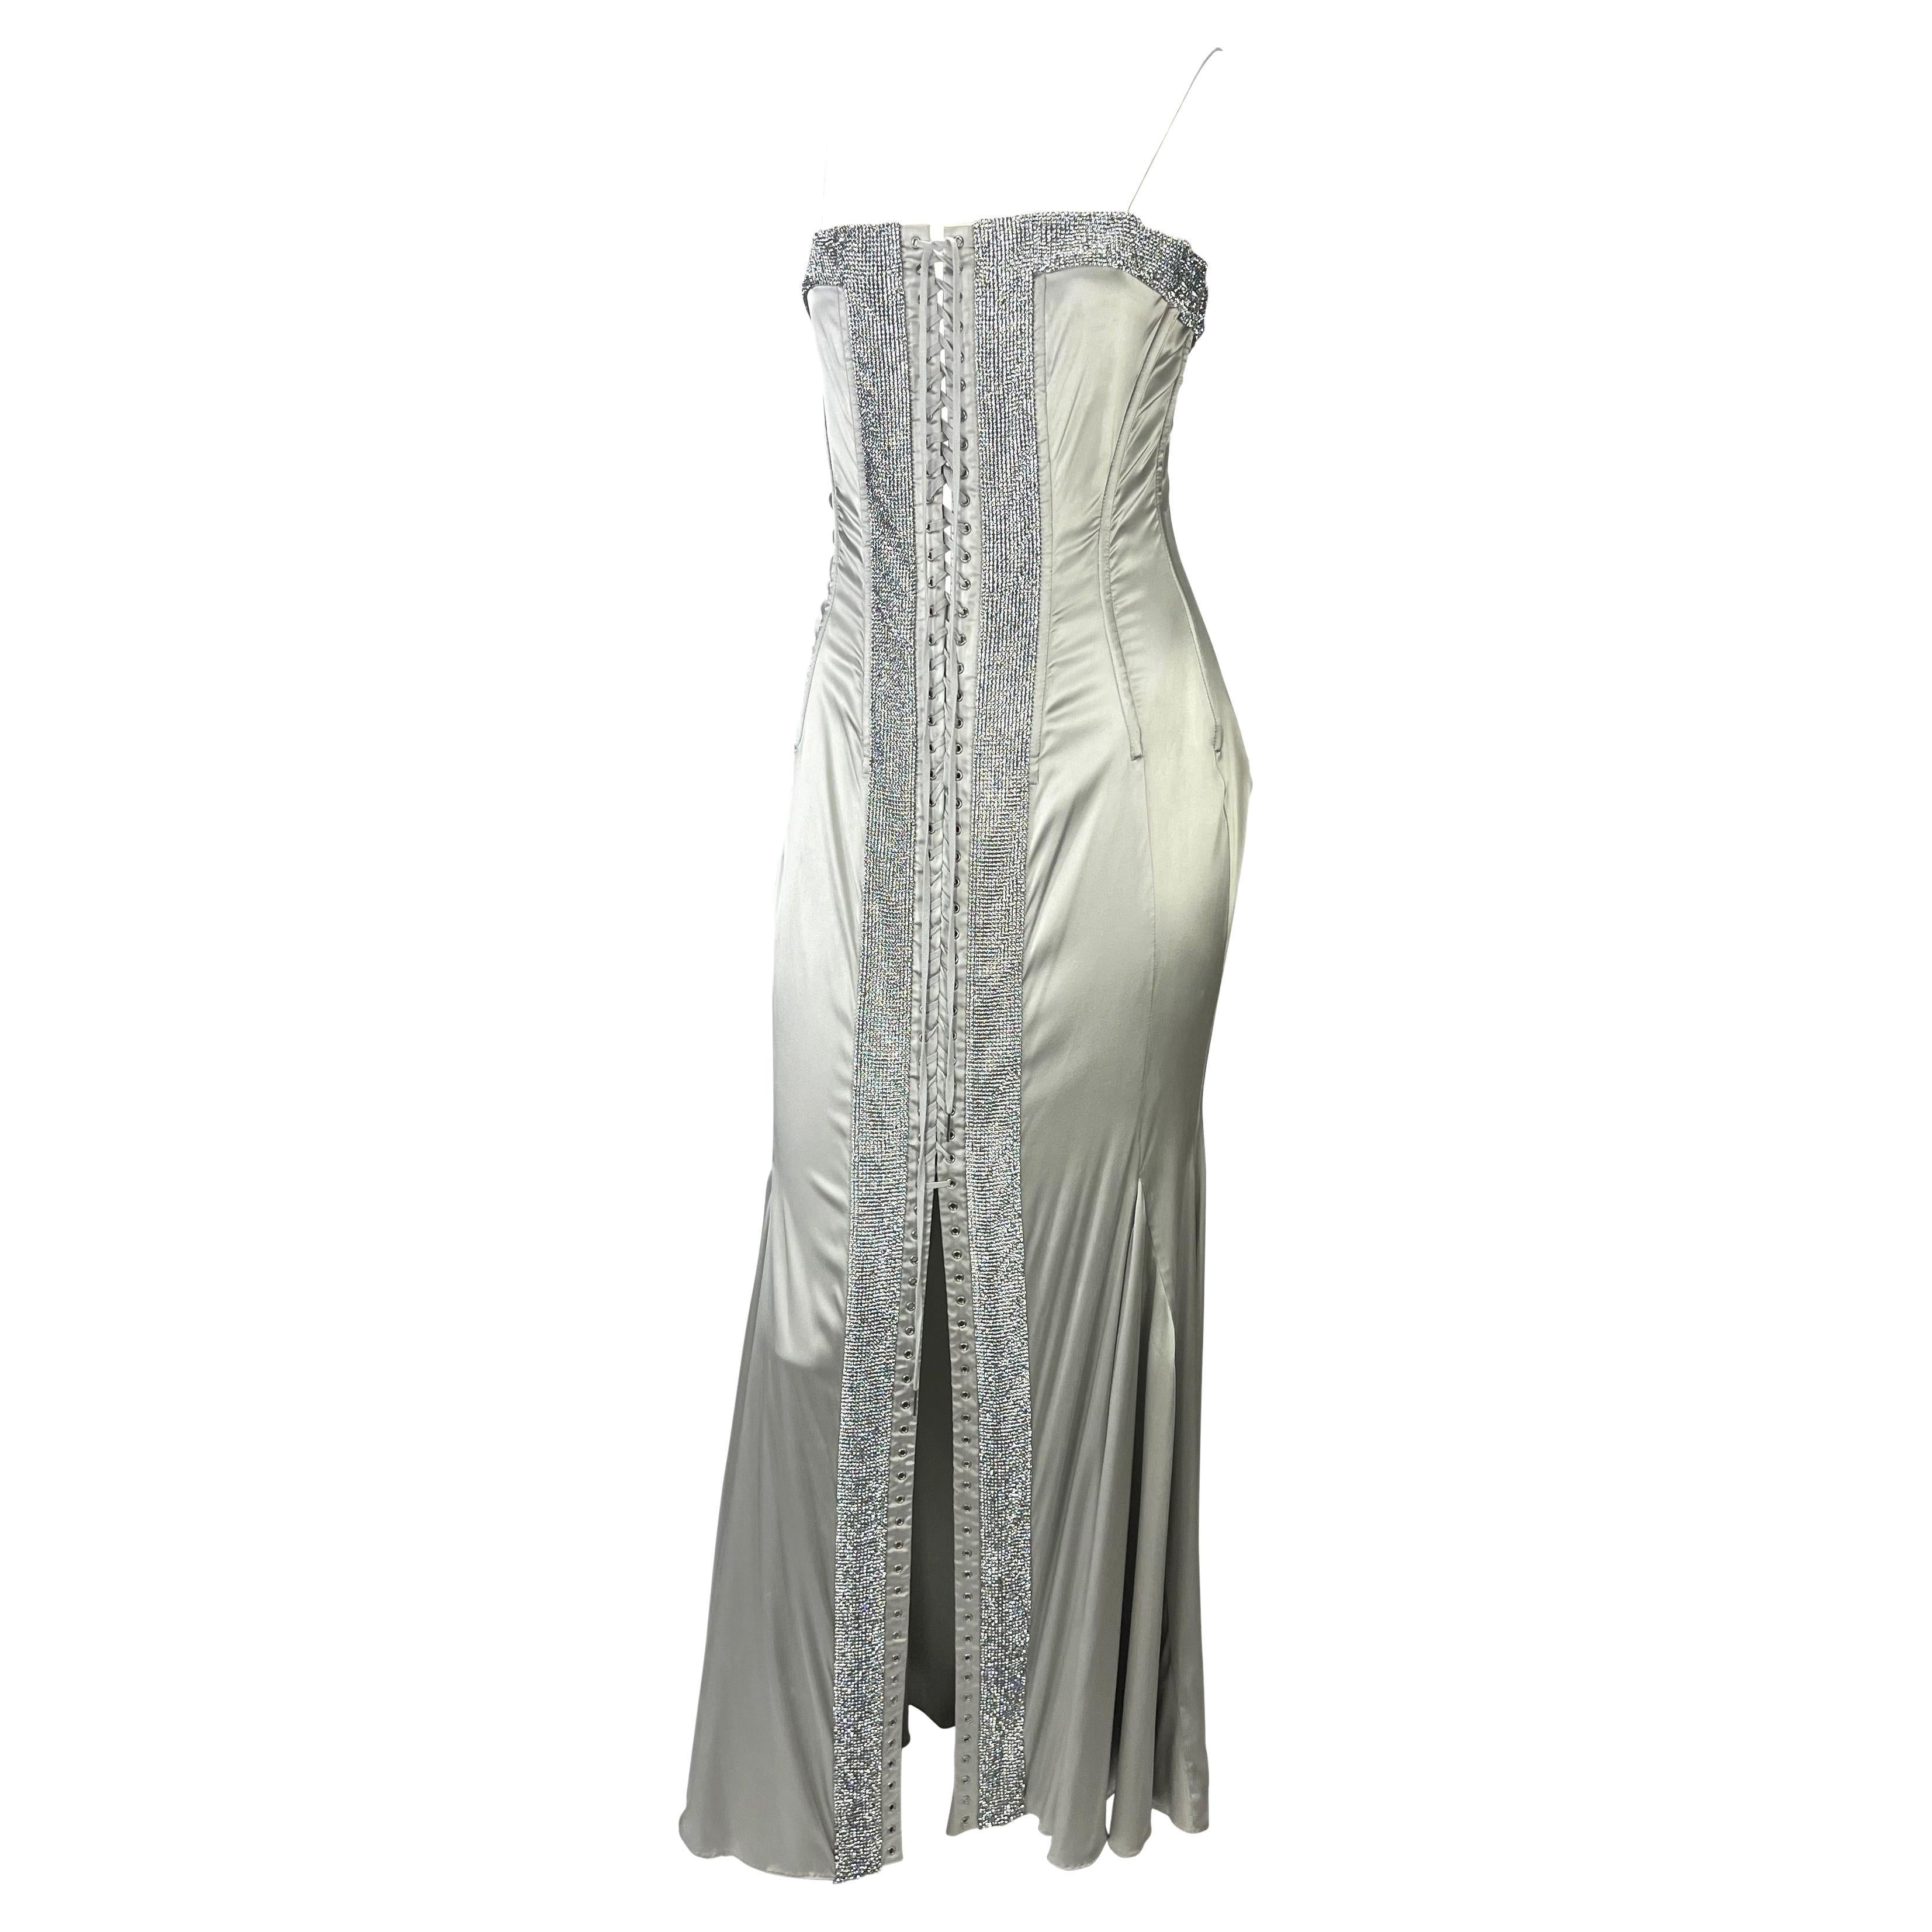 Women's S/S 2004 Dolce & Gabbana Runway Rhinestone Lace-Up Silver Stretch Satin Gown